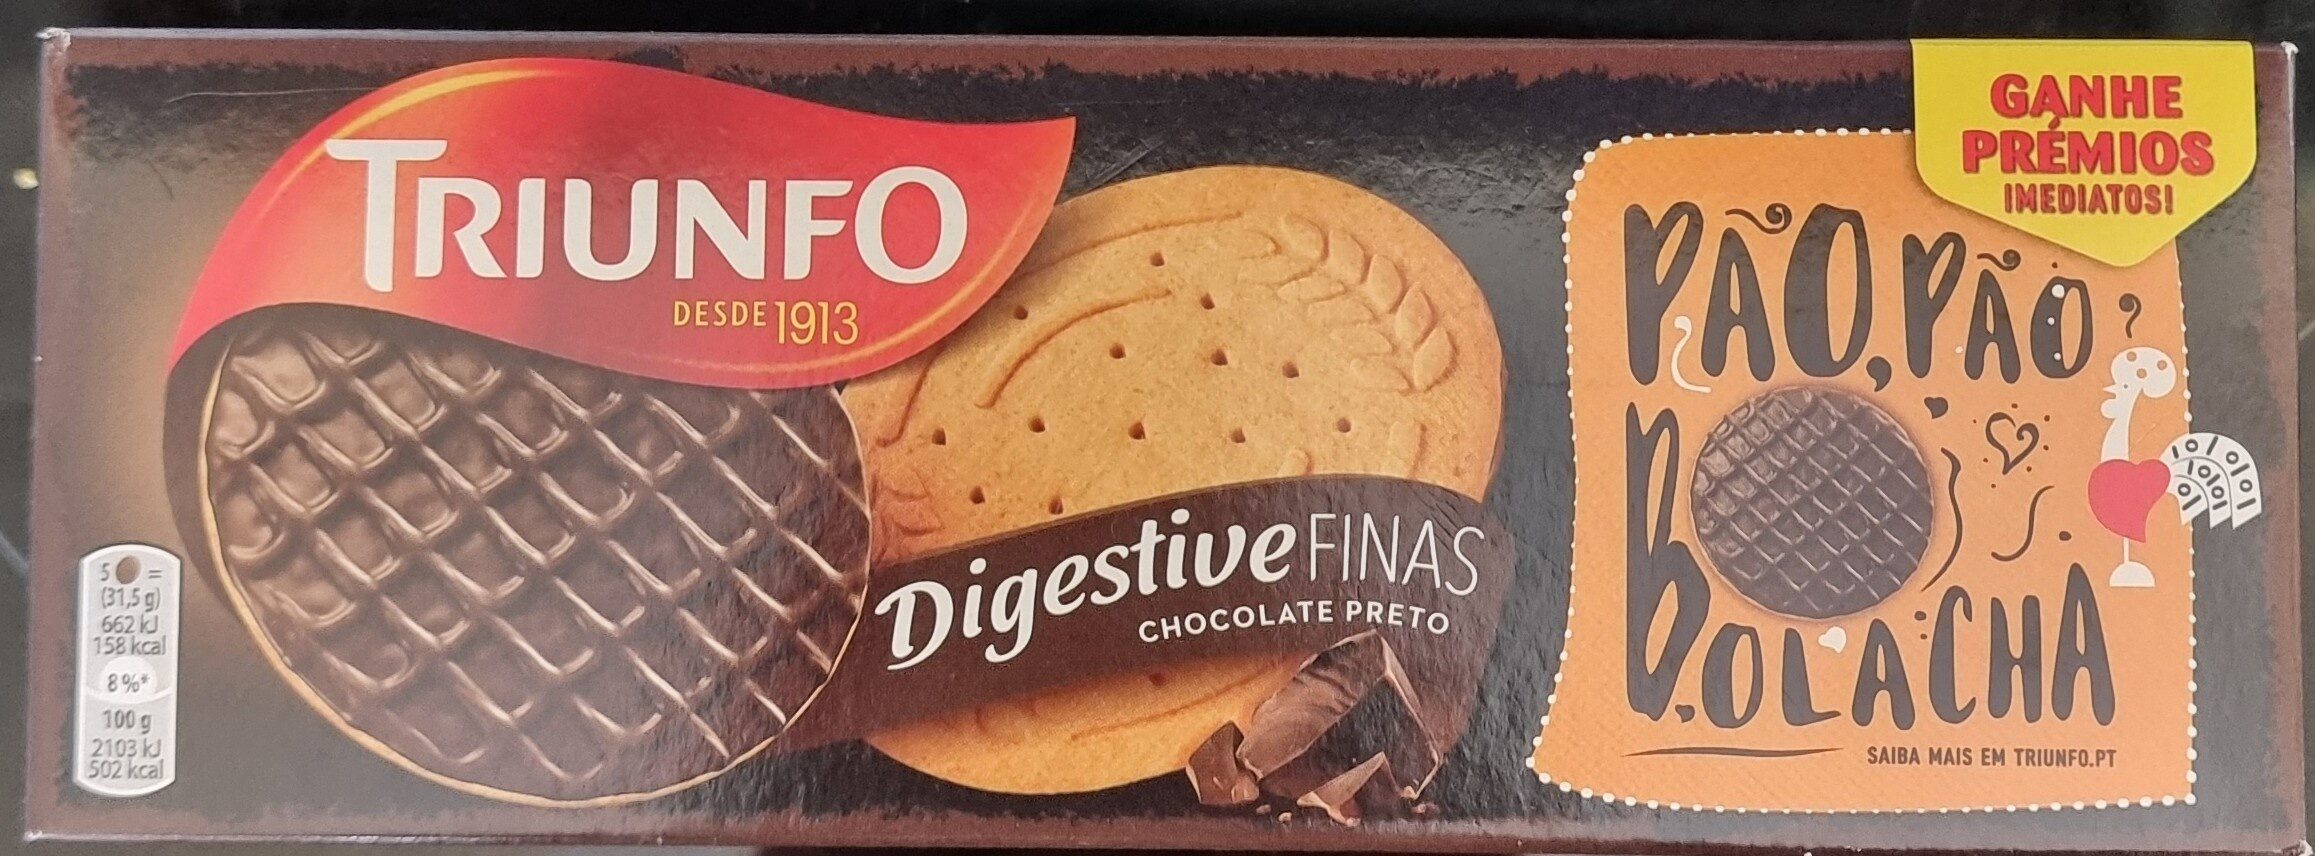 Digestive finas chocolate preto - Producte - pt